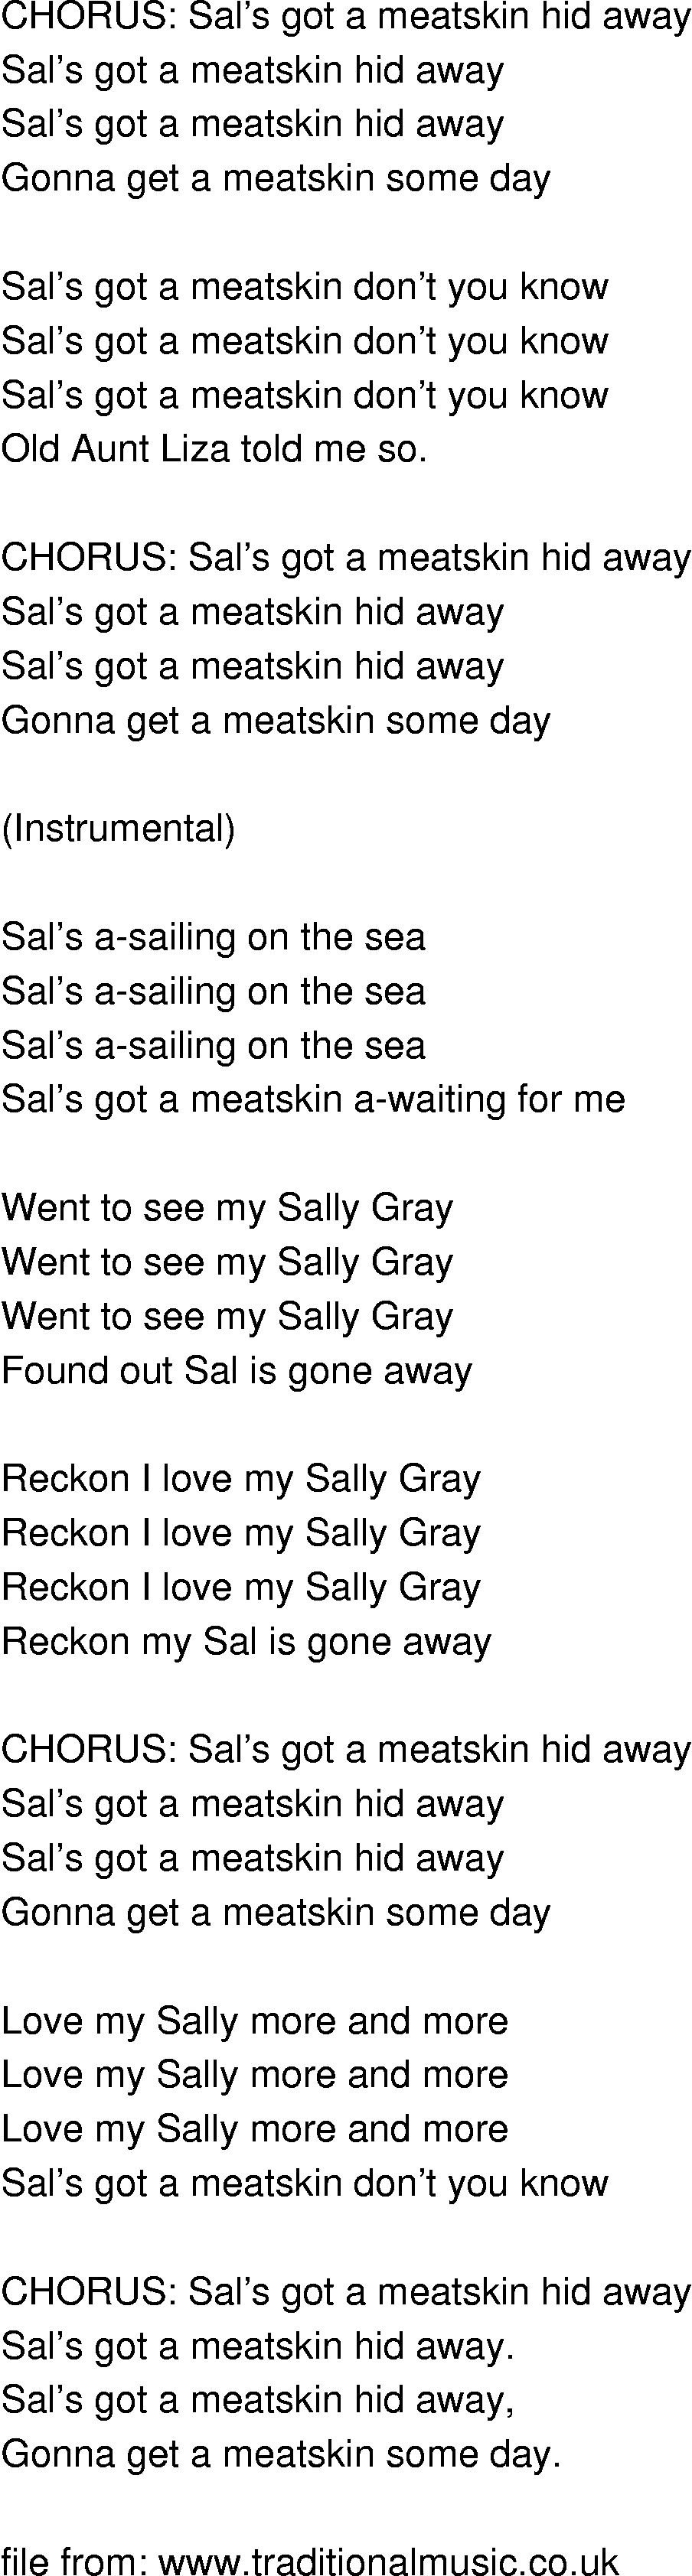 Old-Time (oldtimey) Song Lyrics - sals got a meatskin